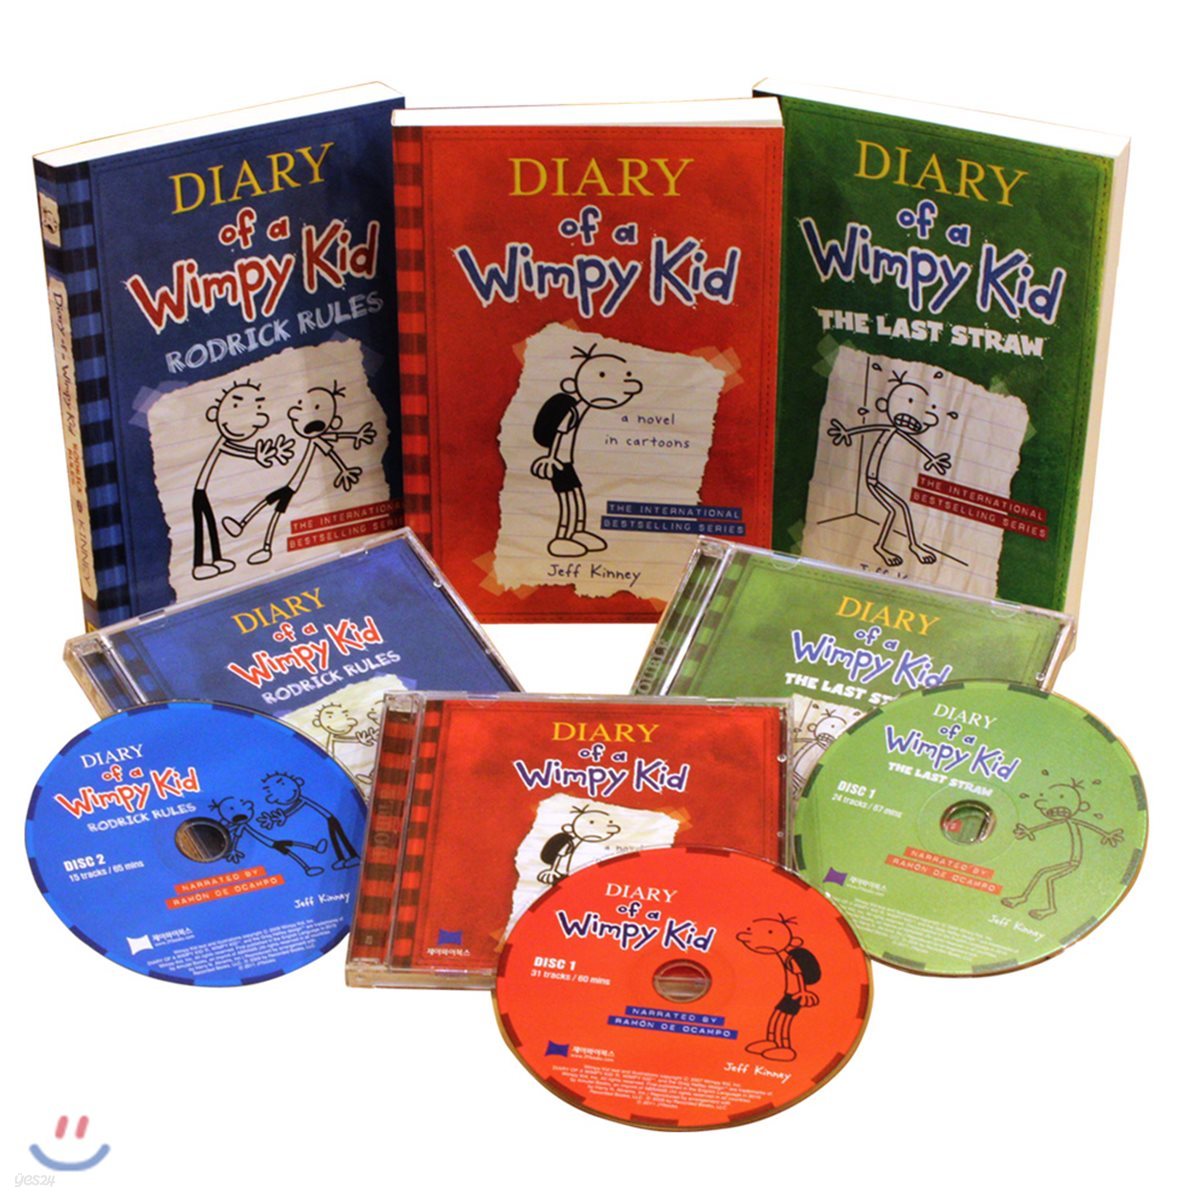 Diary of a Wimpy Kid #1-3 (Book & CD) : 윔피 키드 1-3 원서 & CD 세트